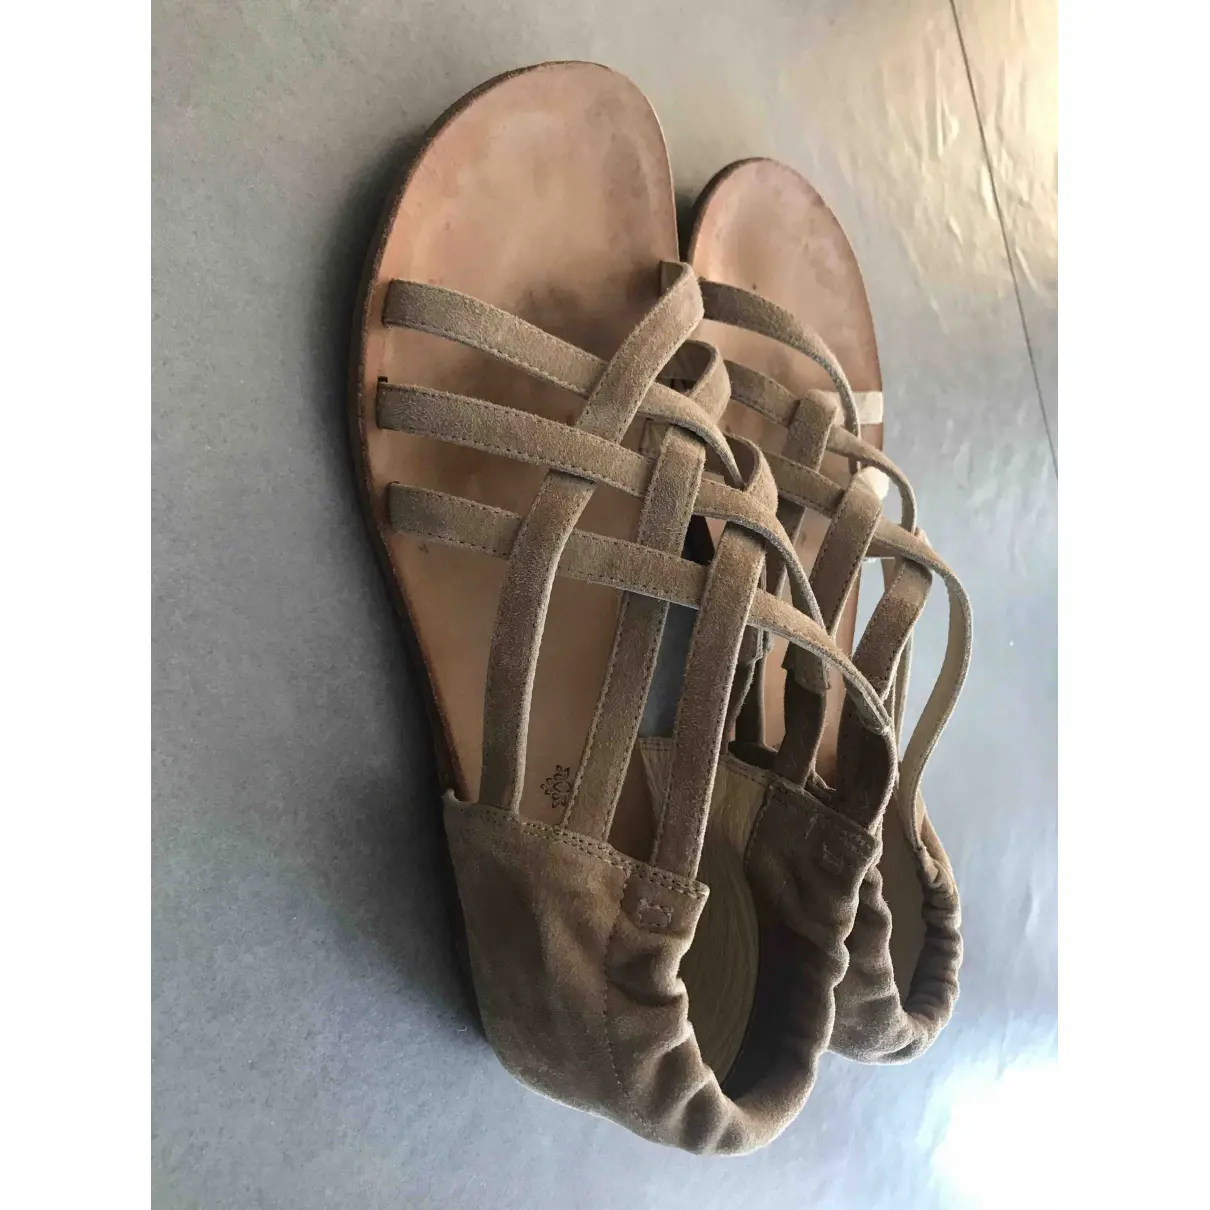 Buy Tatoosh Sandals online